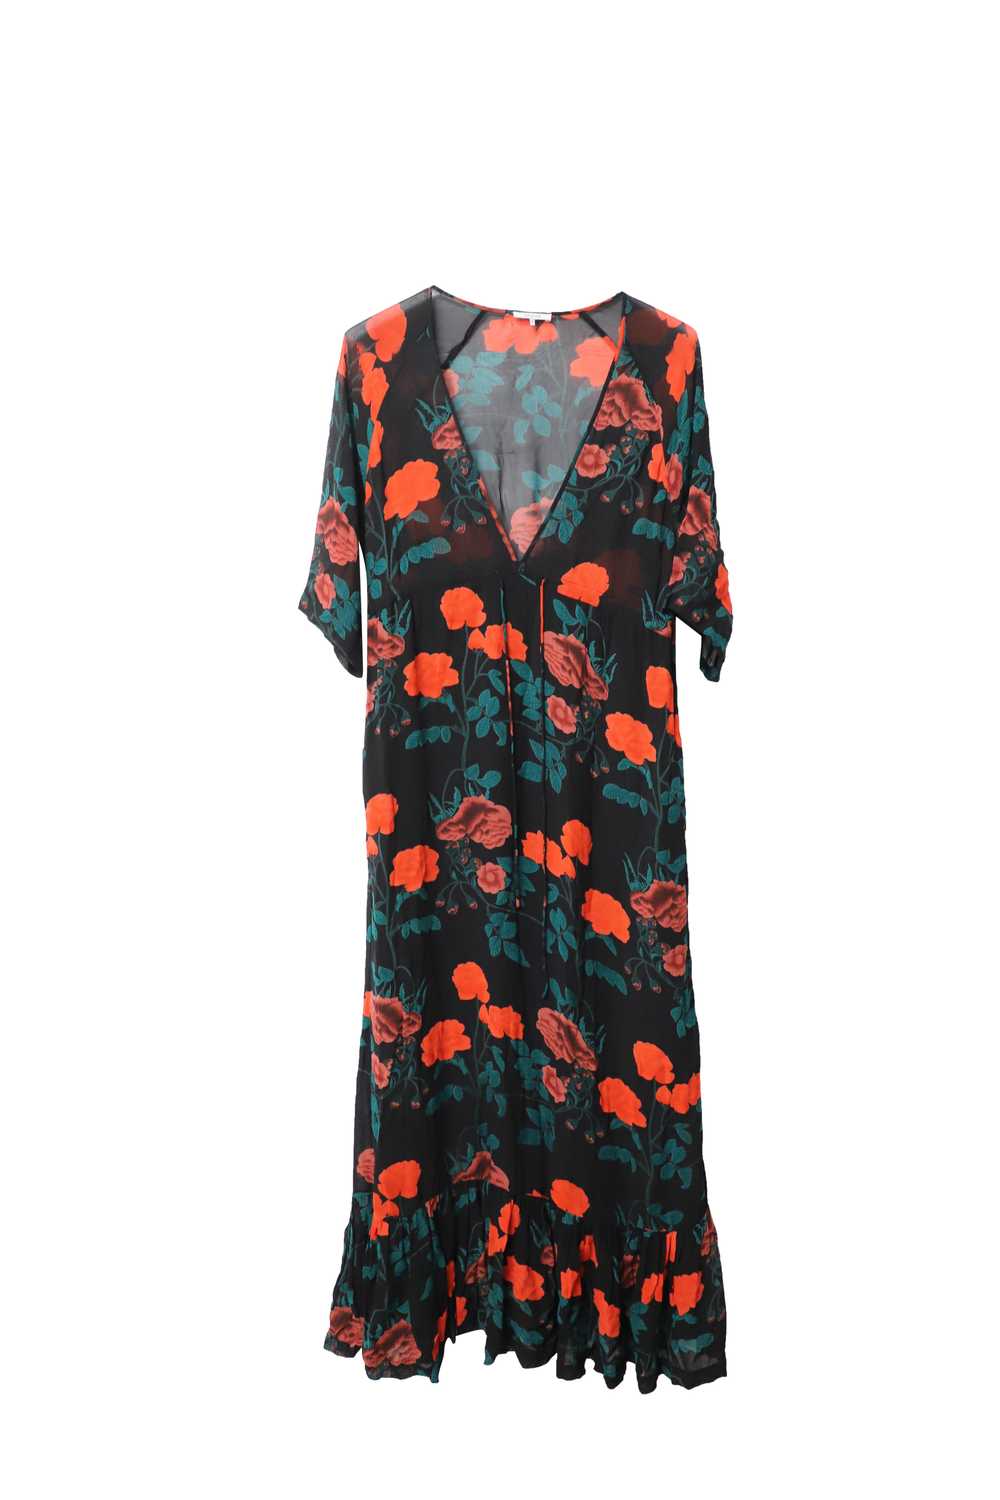 Ganni Black floral print georgette Newman dress - image 5